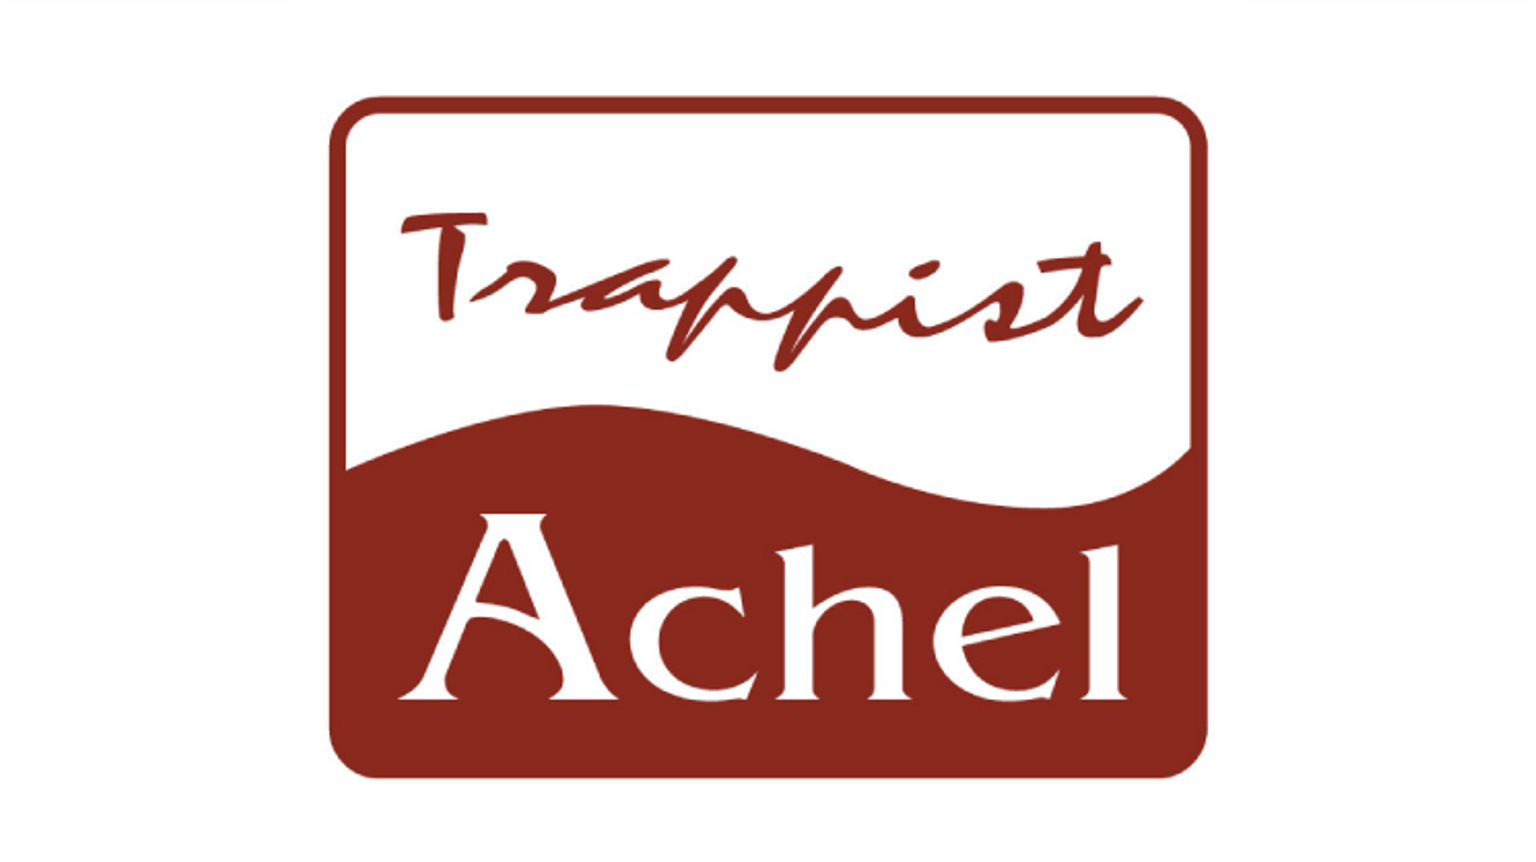 thumbnail for blog article named: Achel, gewezen trappist